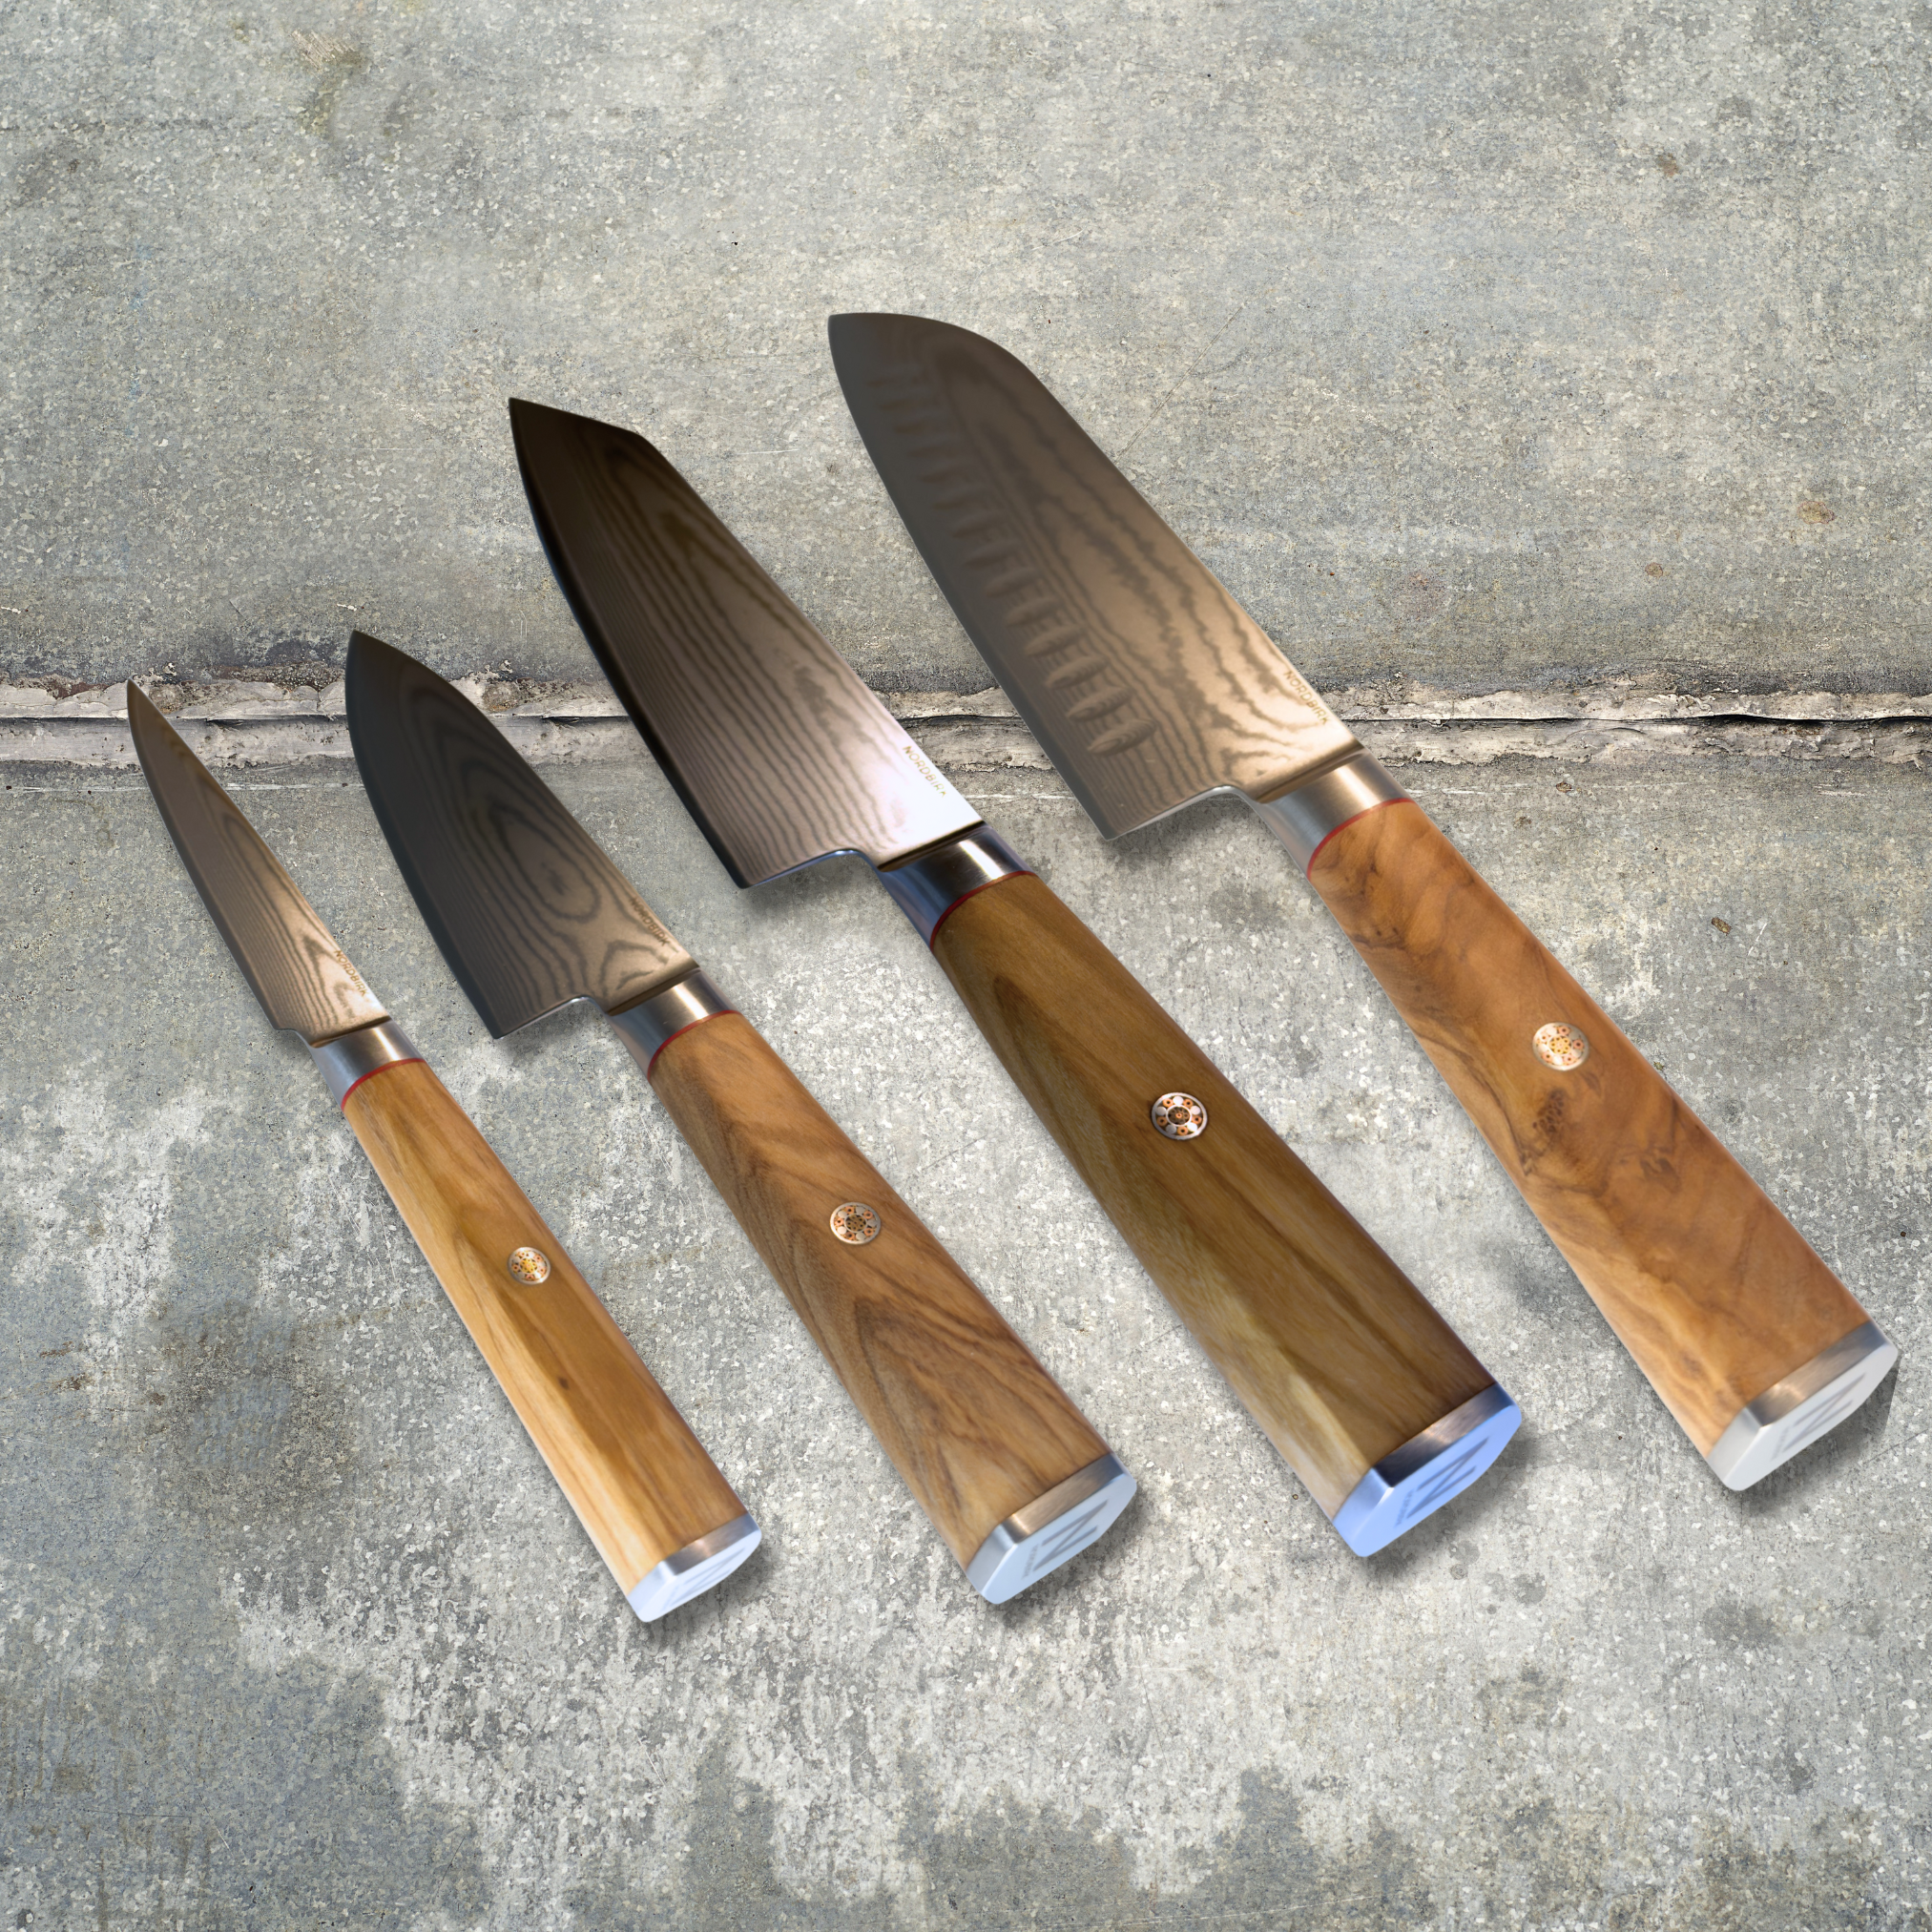 Plus-kollektionen, Premium Edition: Elegante knive til det meste